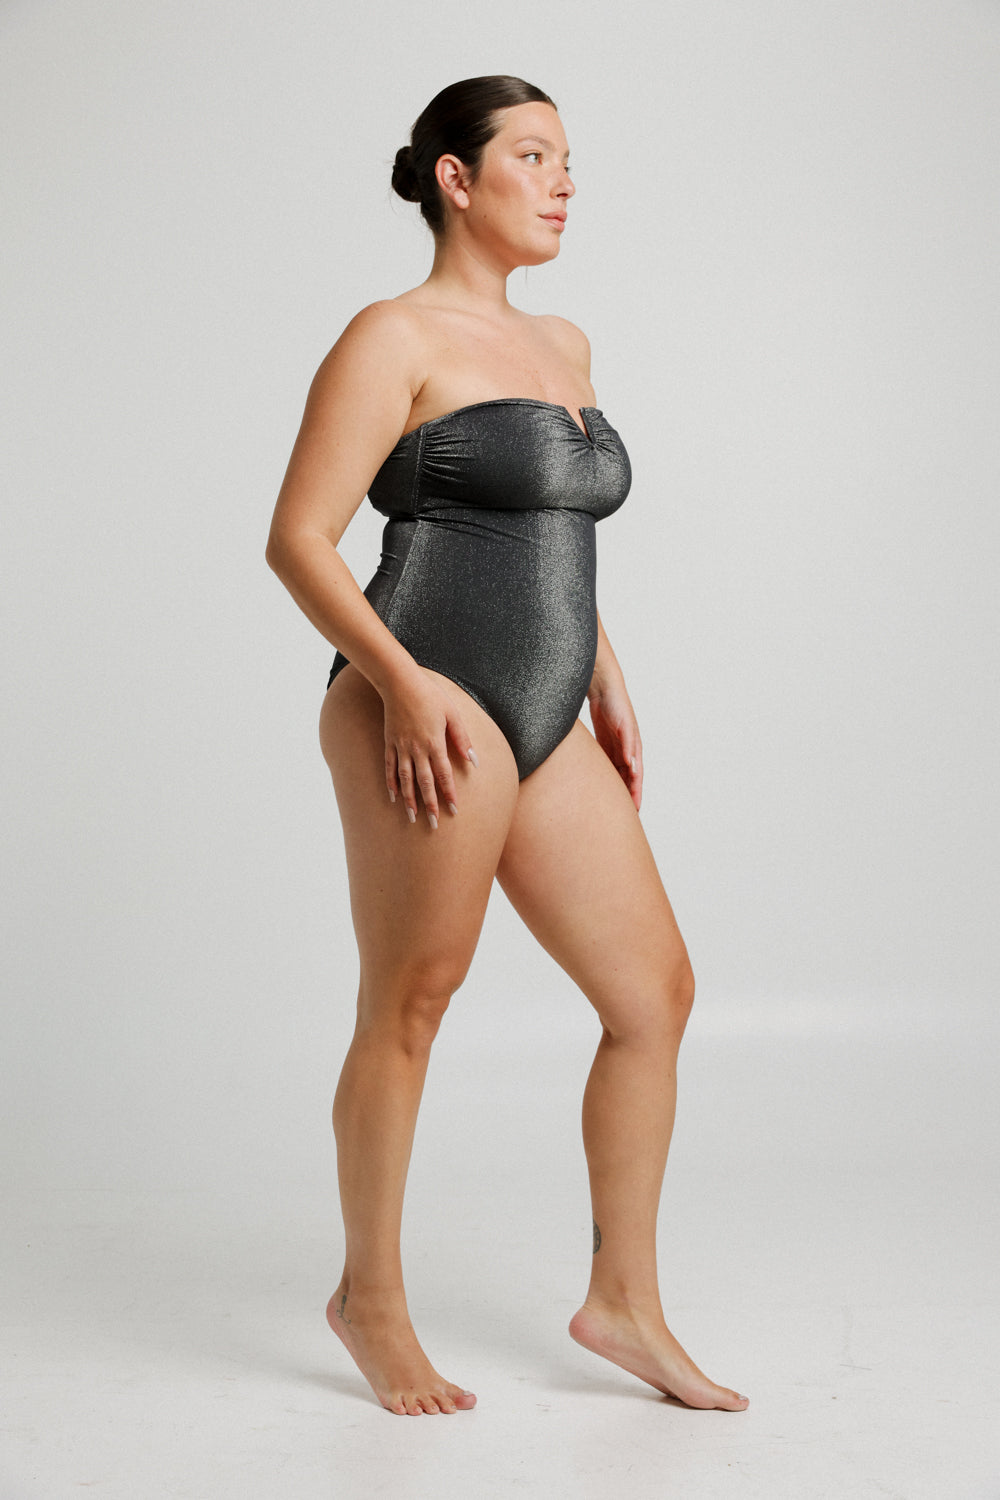 Streep Sparkly Black Swimsuit